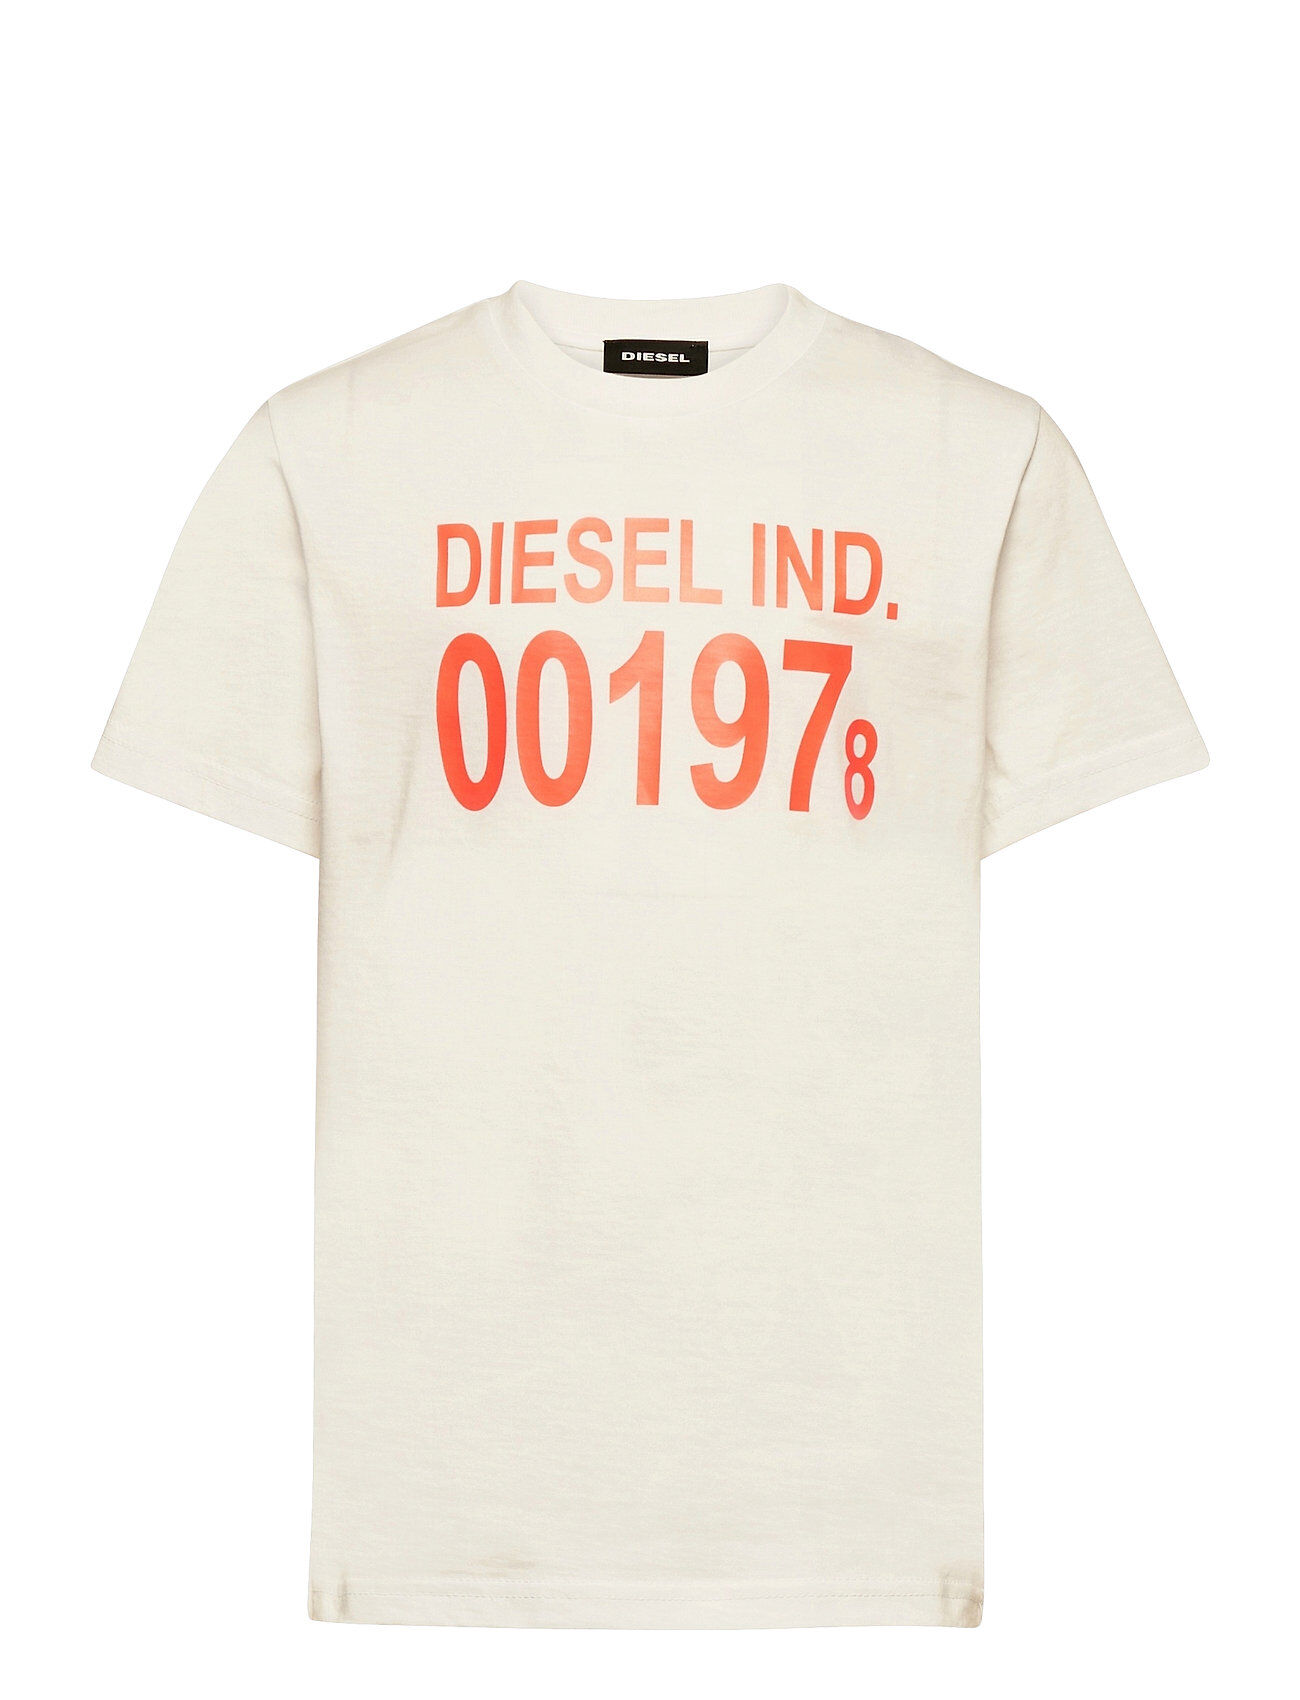 Diesel Tdiego001978 T-Shirt T-shirts Short-sleeved Hvit Diesel